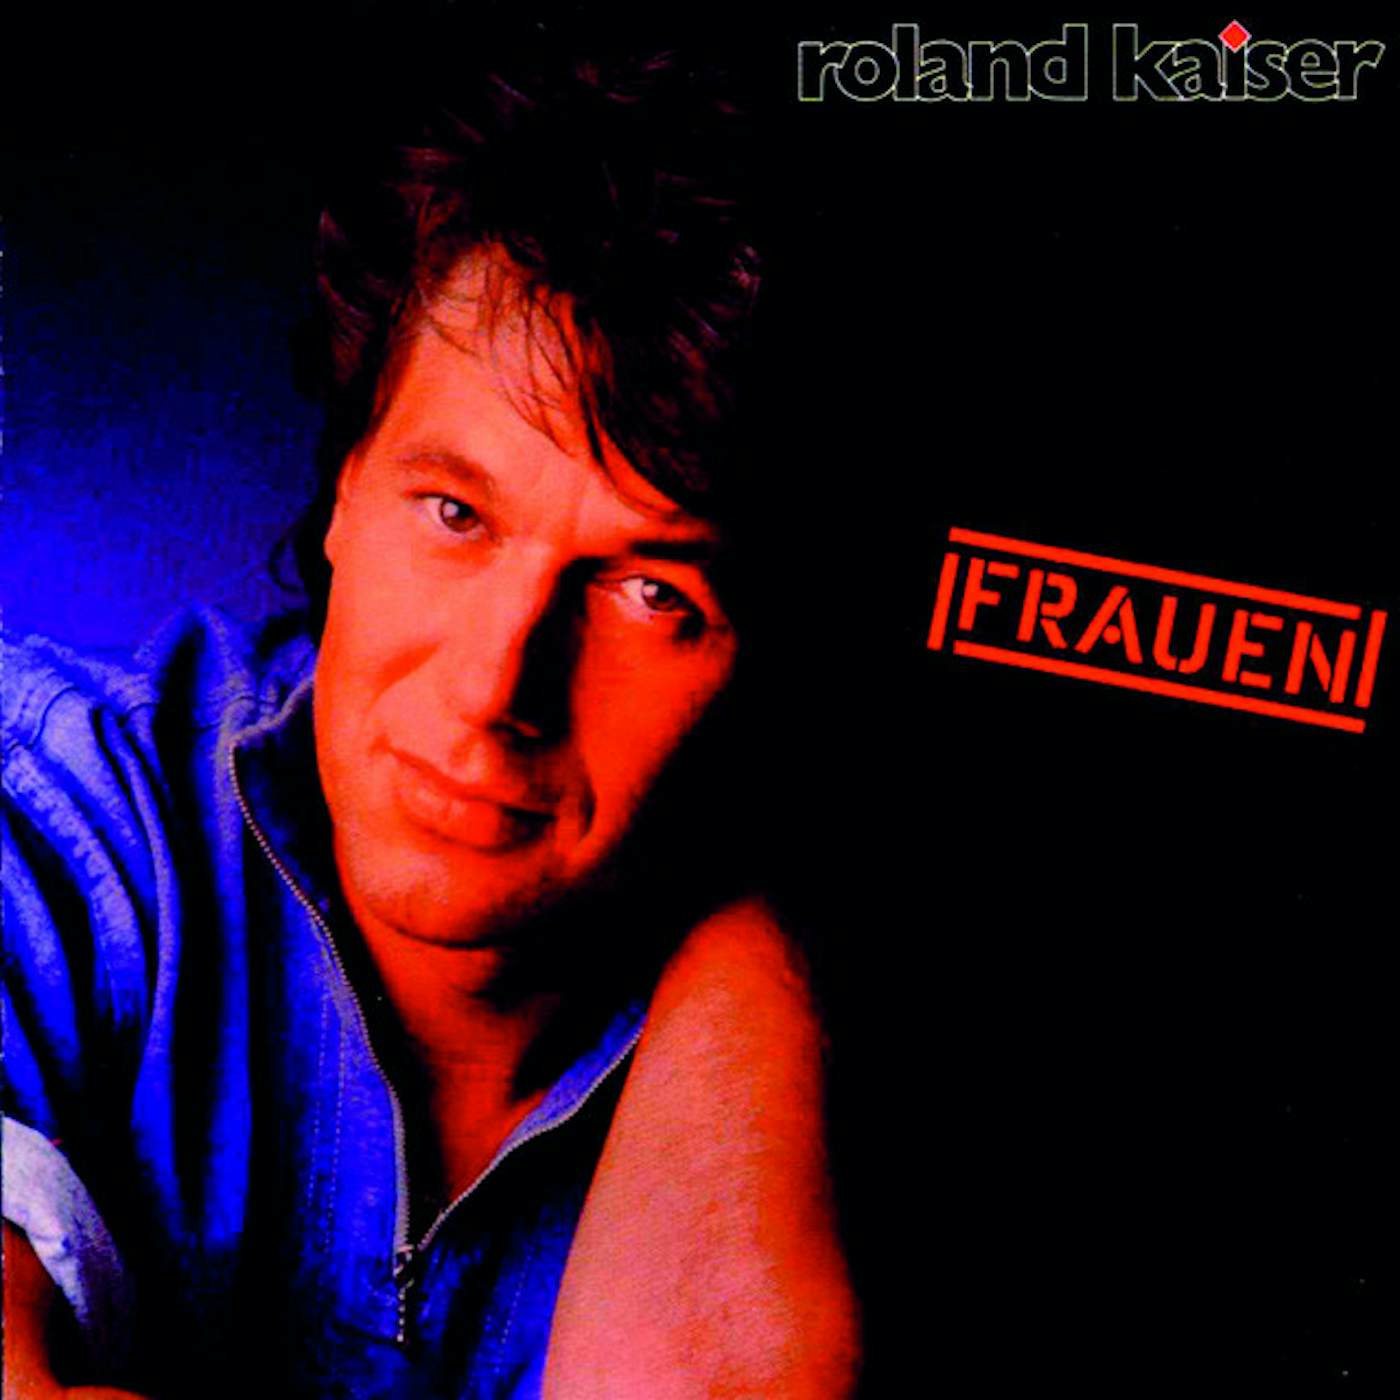 Roland Kaiser FRAUEN CD